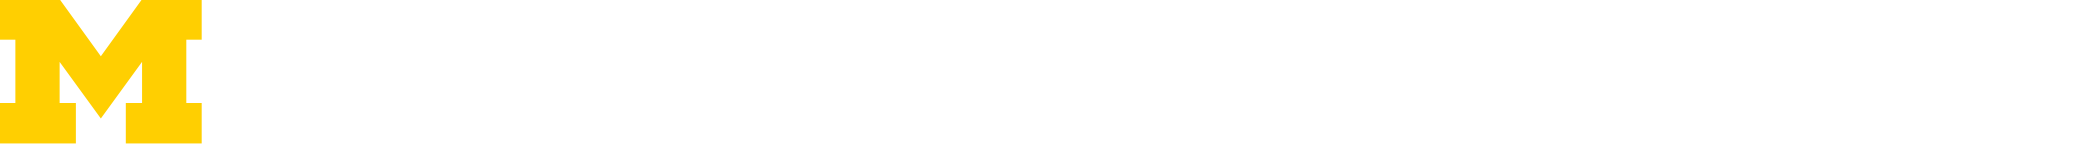 Environmental Microbiology_Molecular Biology Lab logo